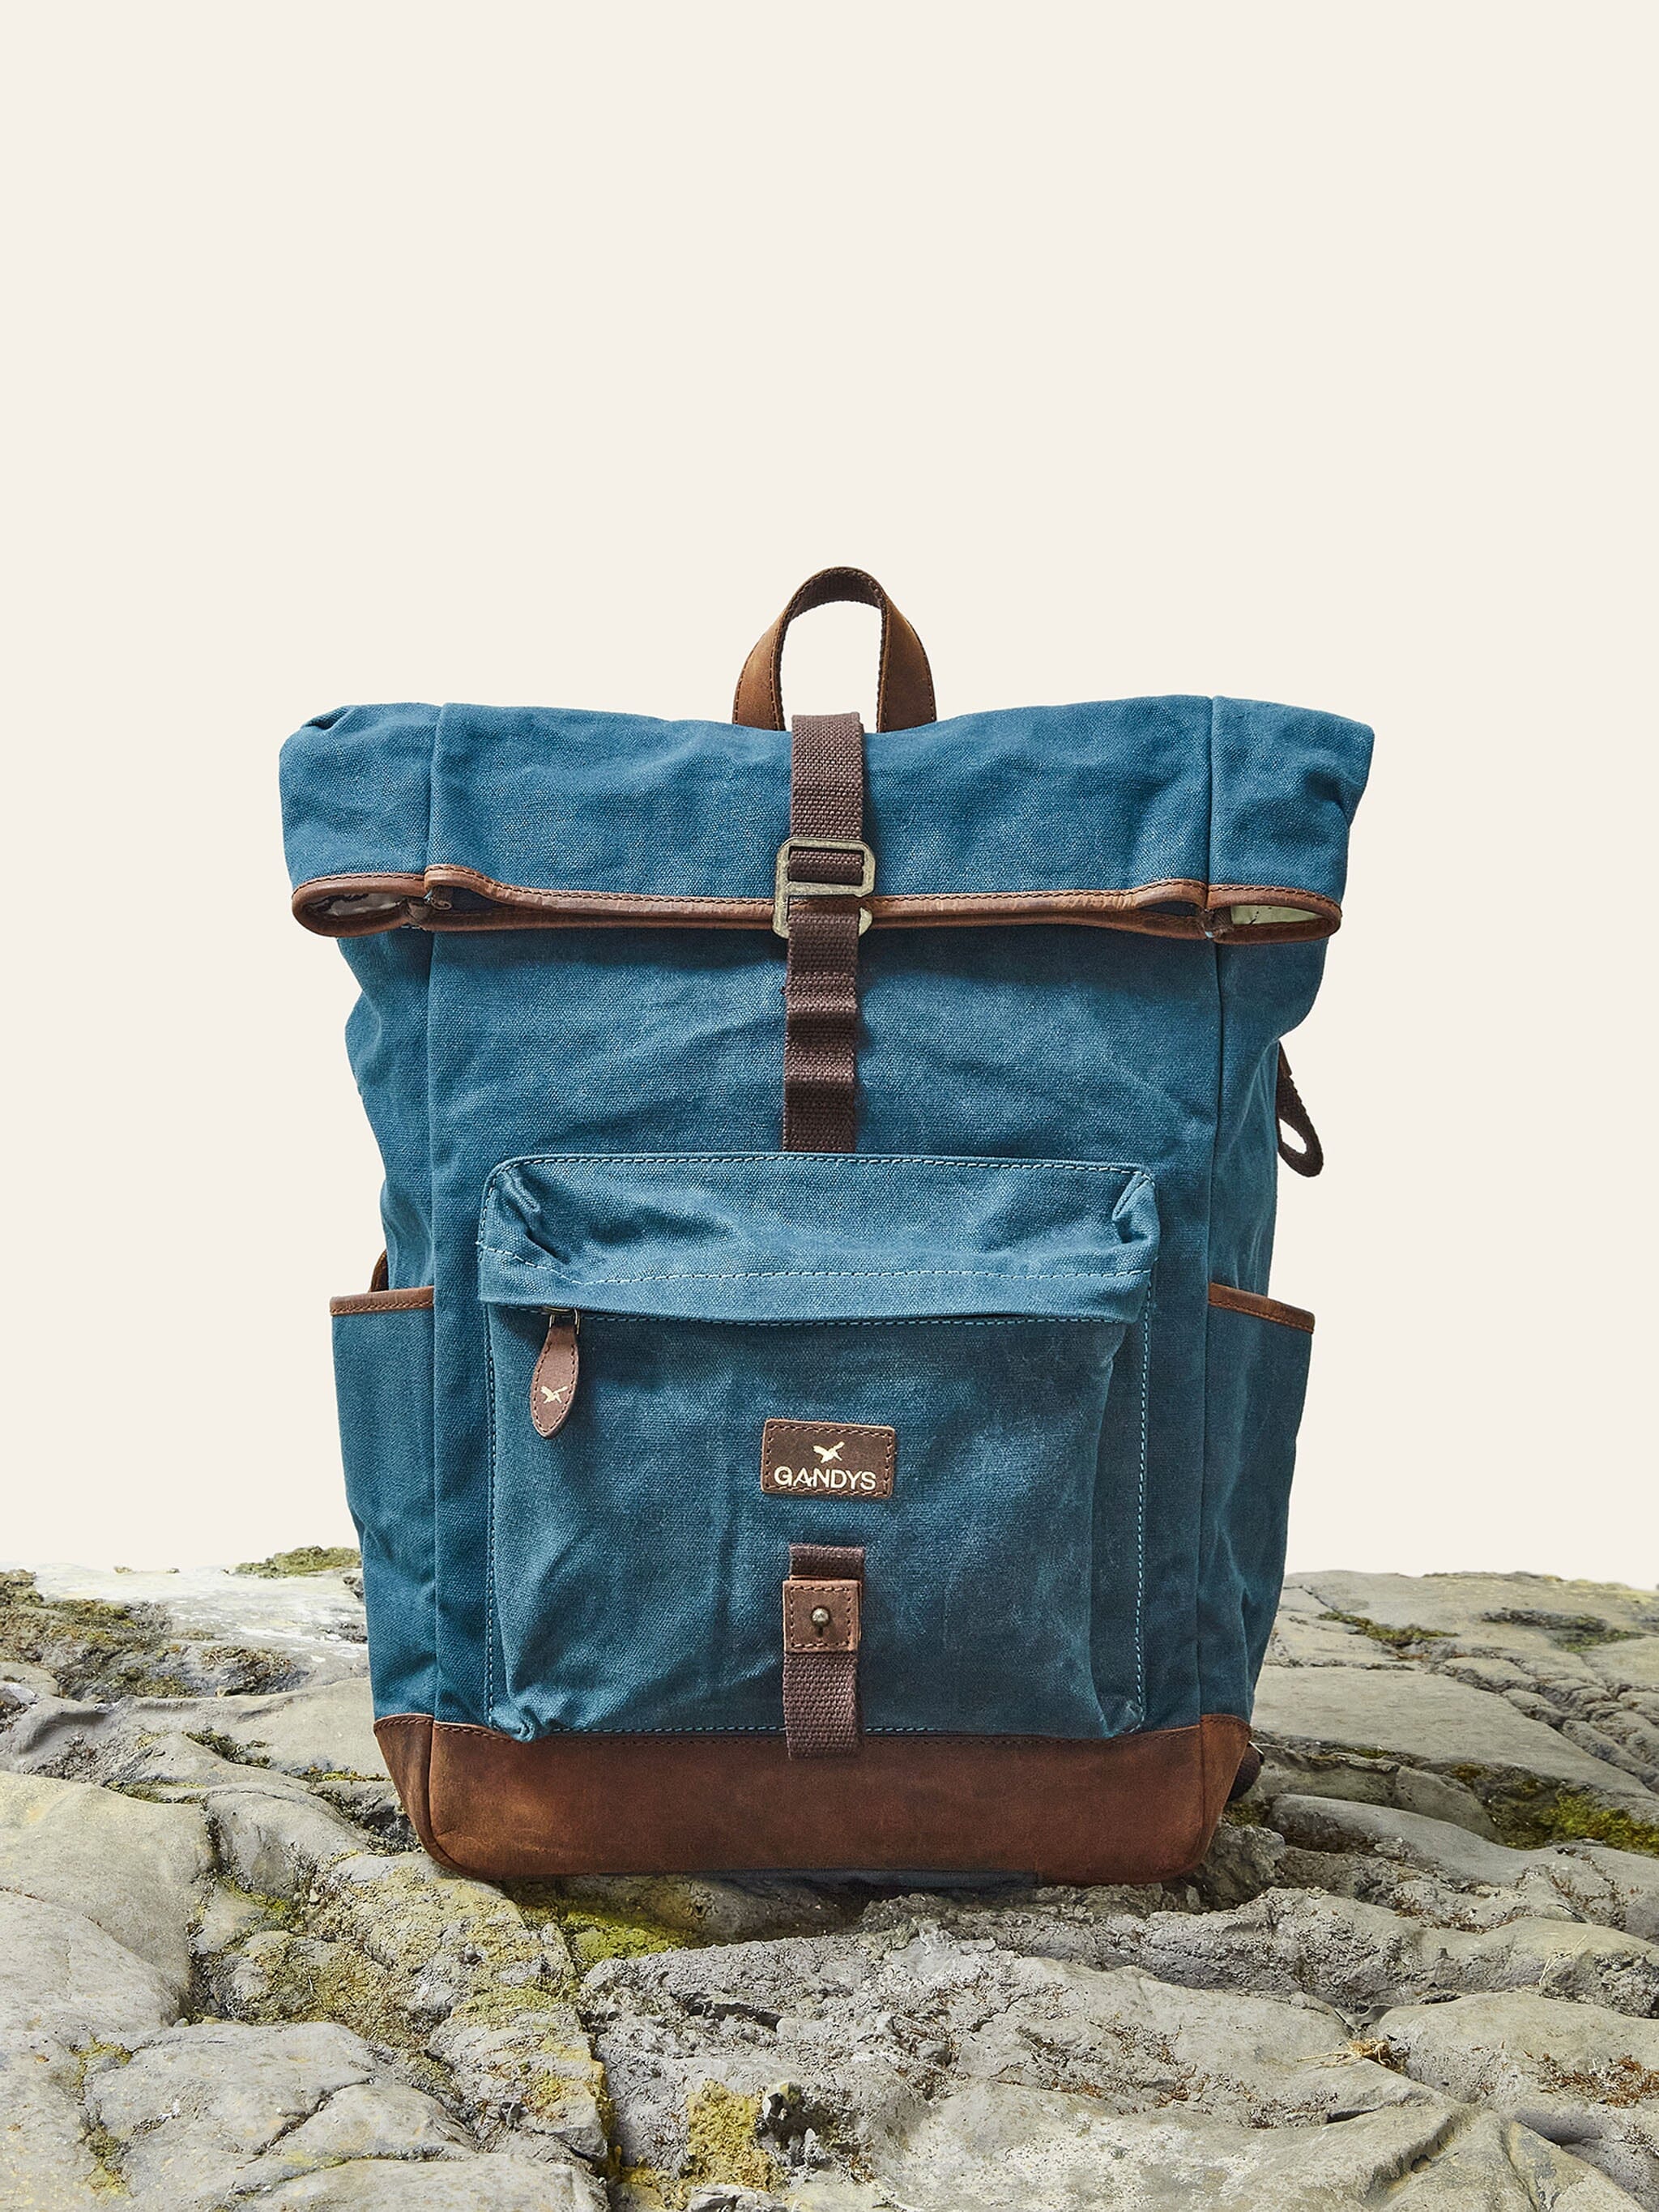 Gandys Teal City Explorer Cross Body Bag | eBay